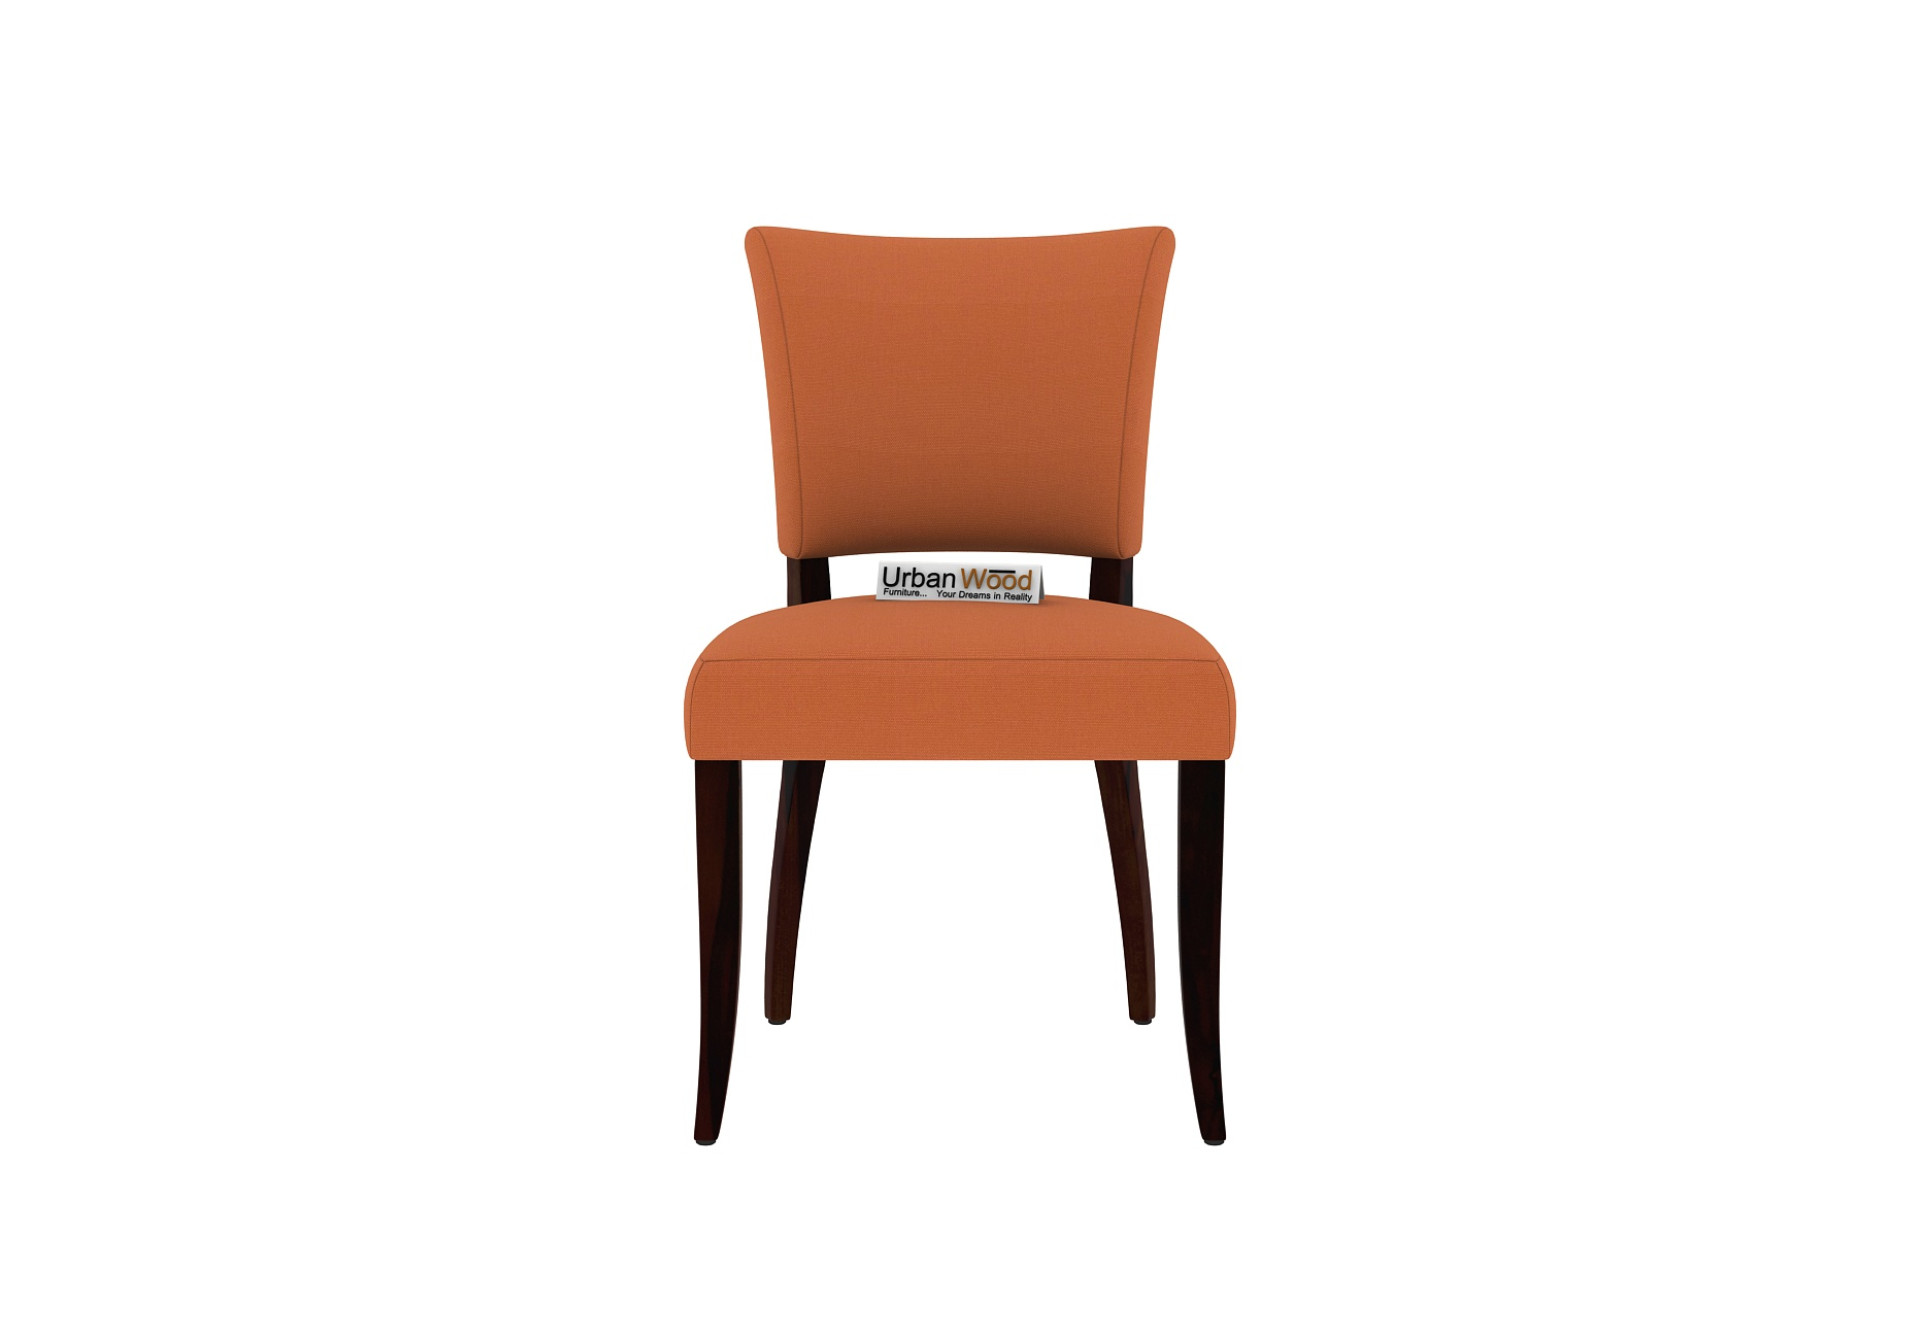 Quipo Dining Chair - Set Of 2 (Cotton, Diana Orange)